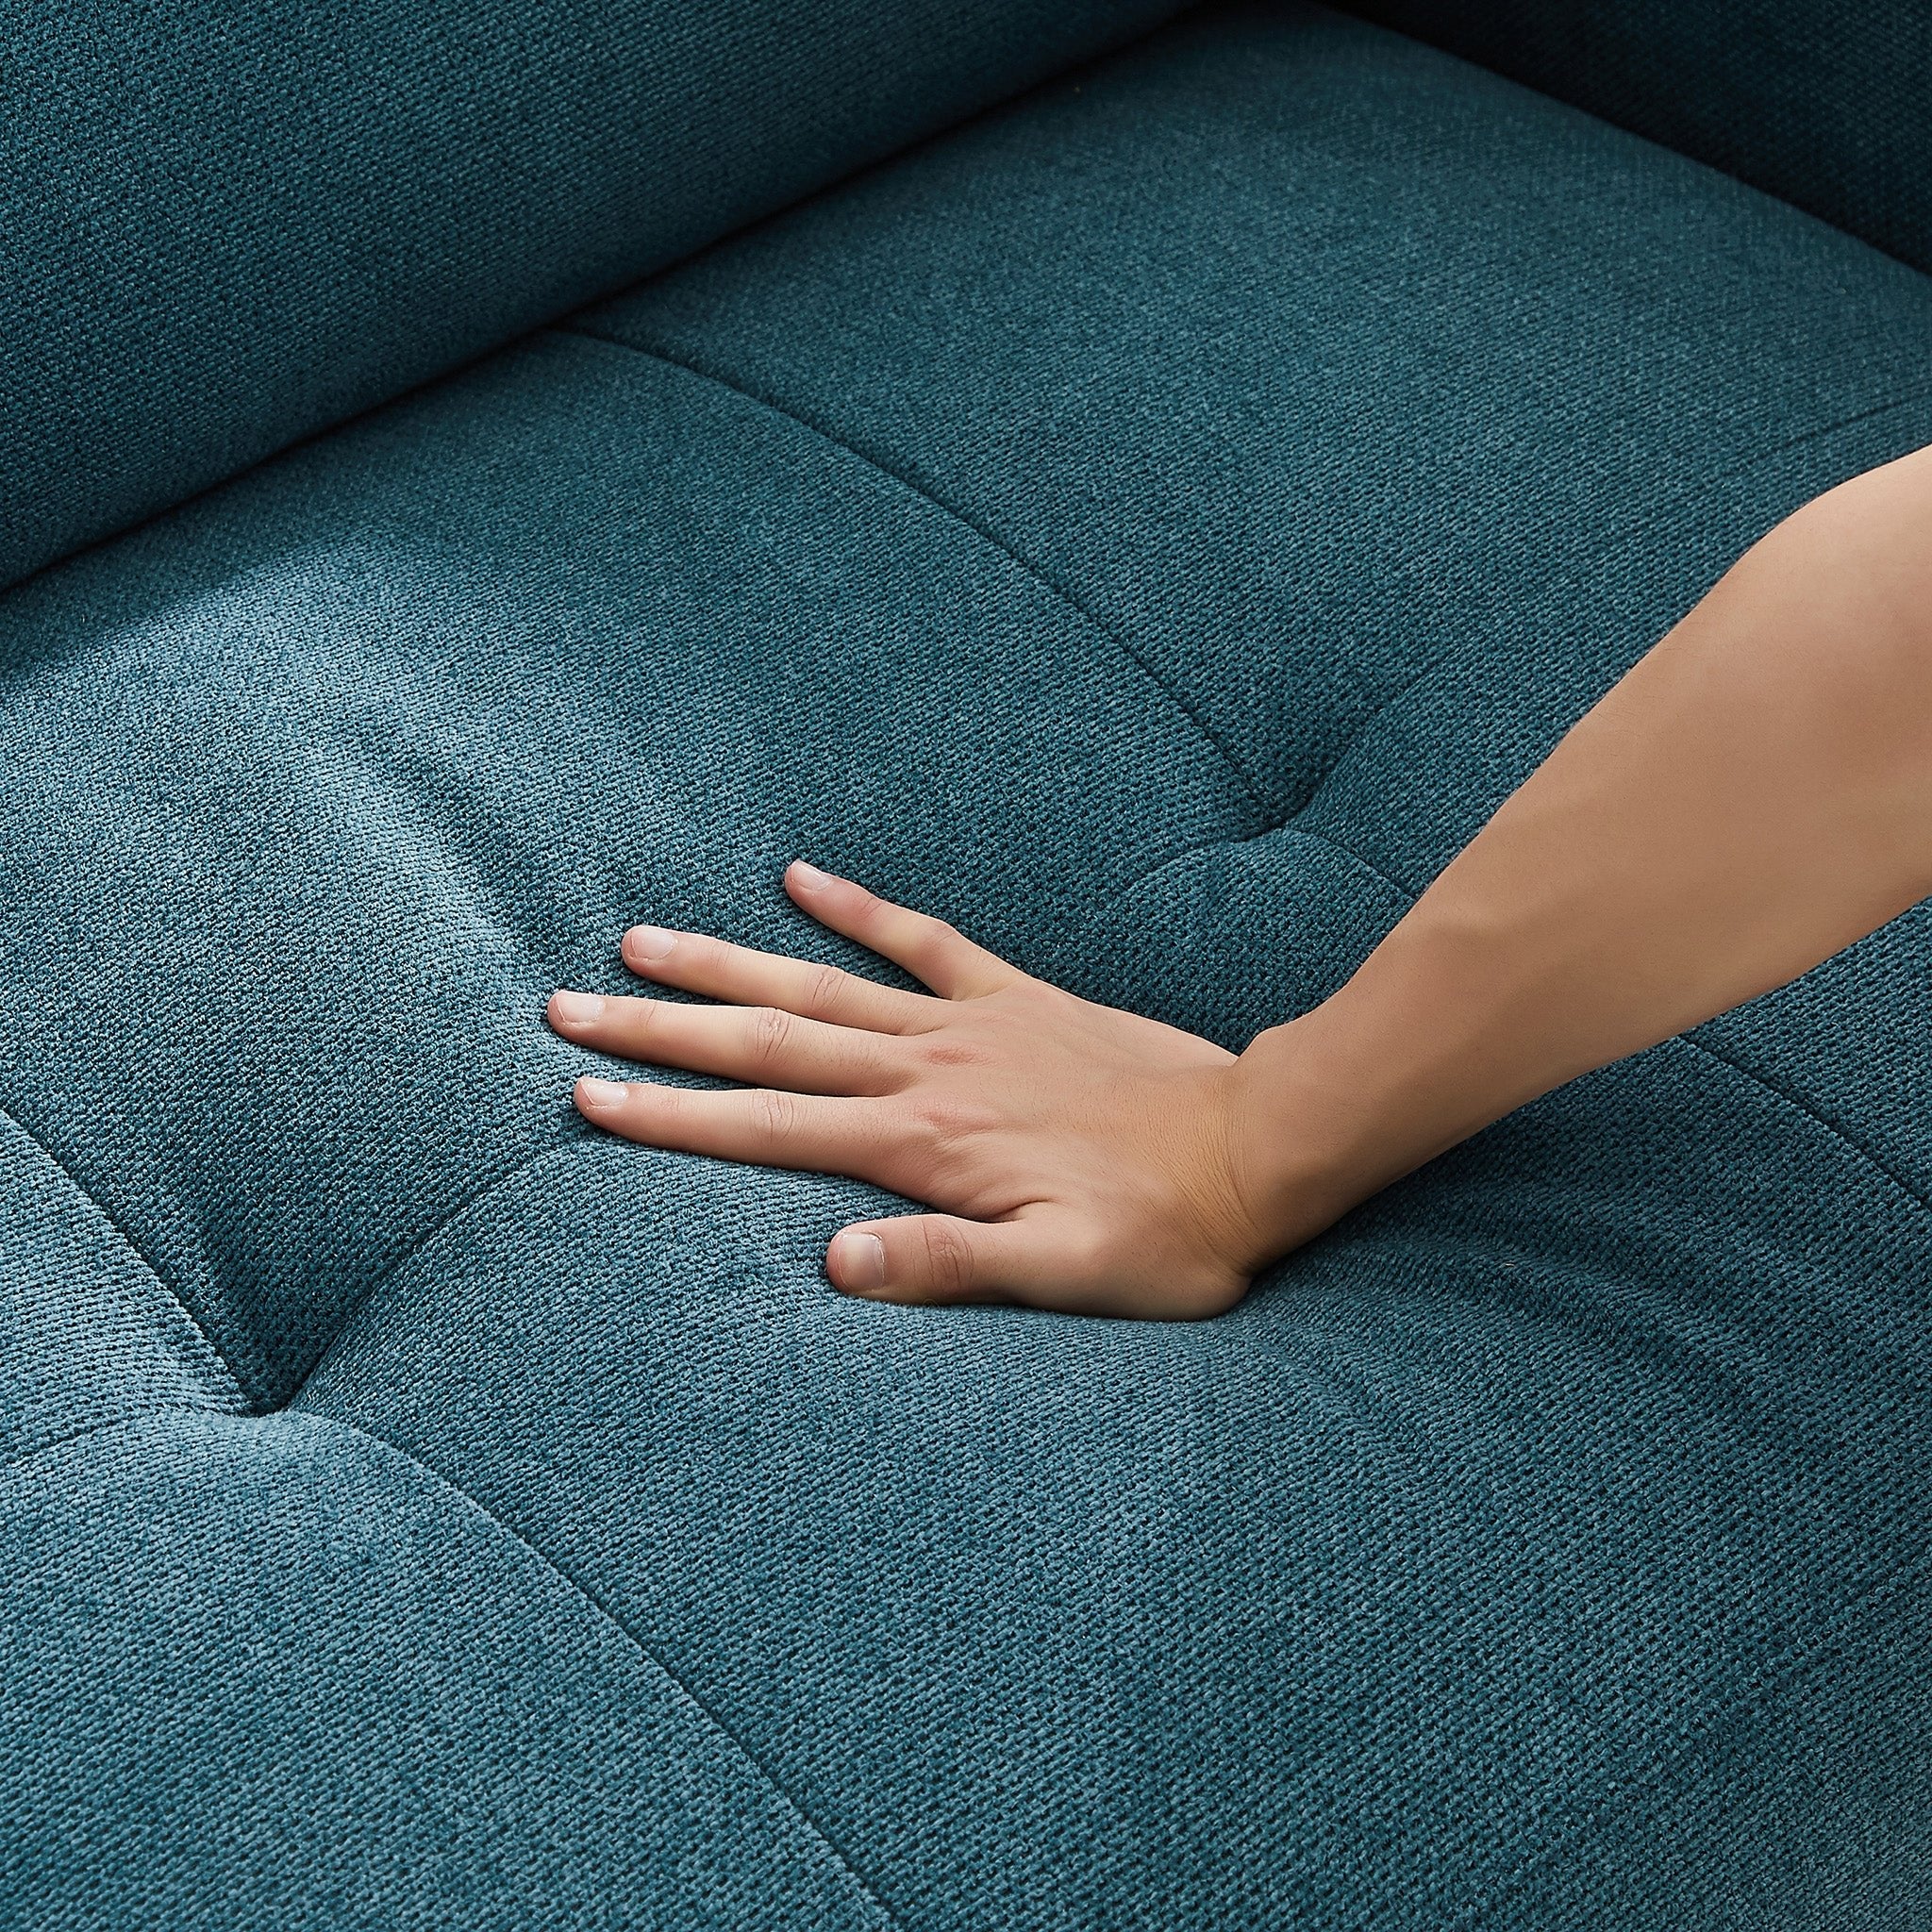 London Sofa (Blue Linen)